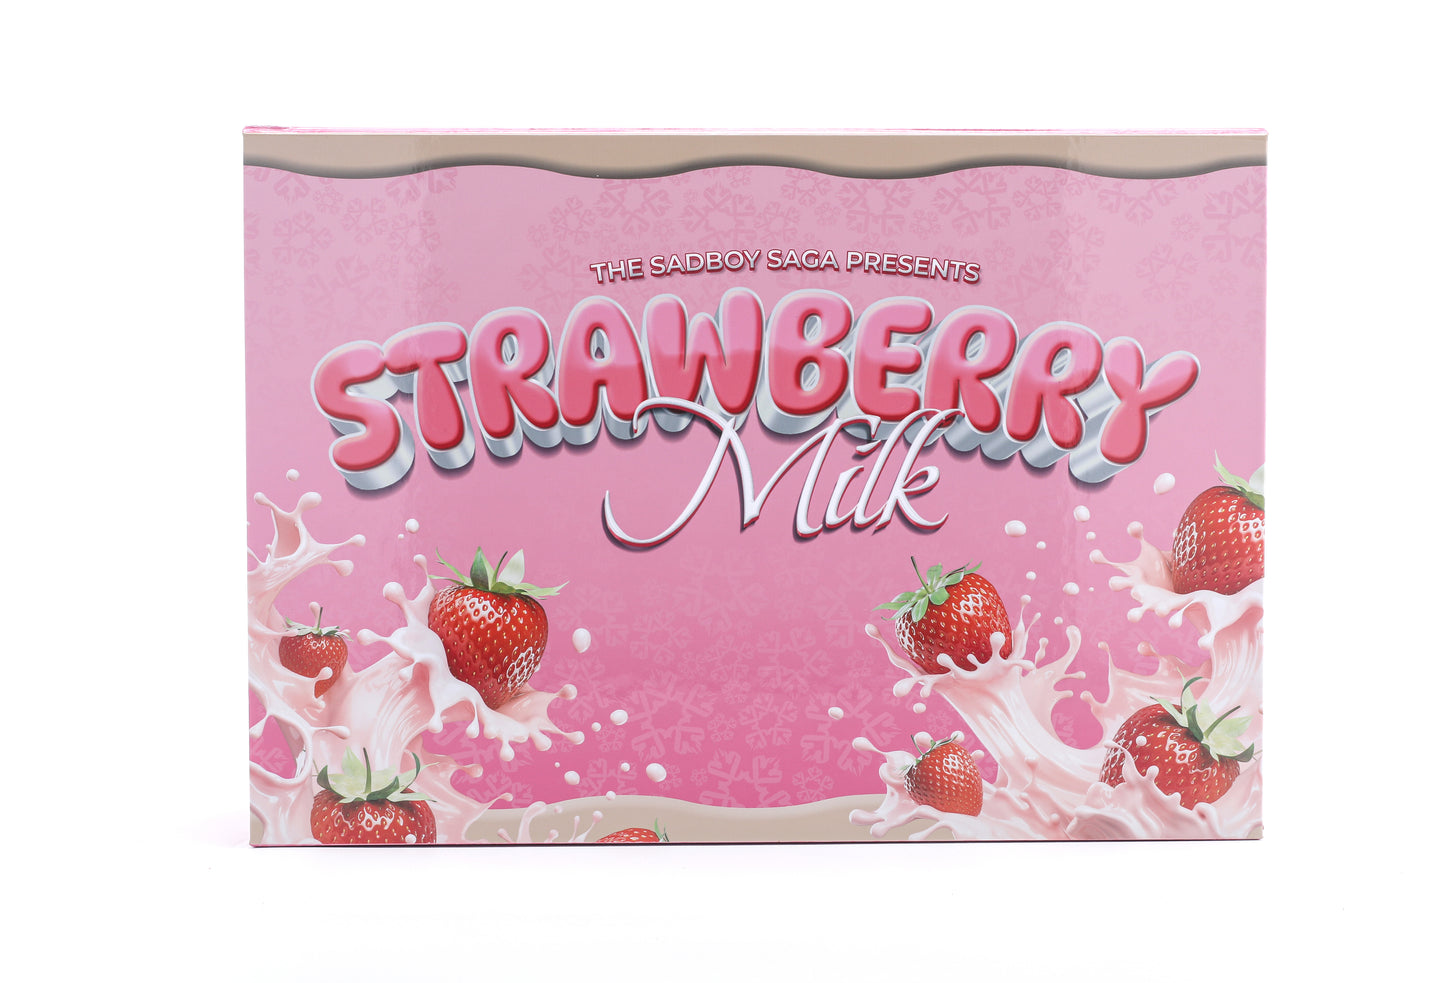 Saga Skywalker “Strawberry Milk”